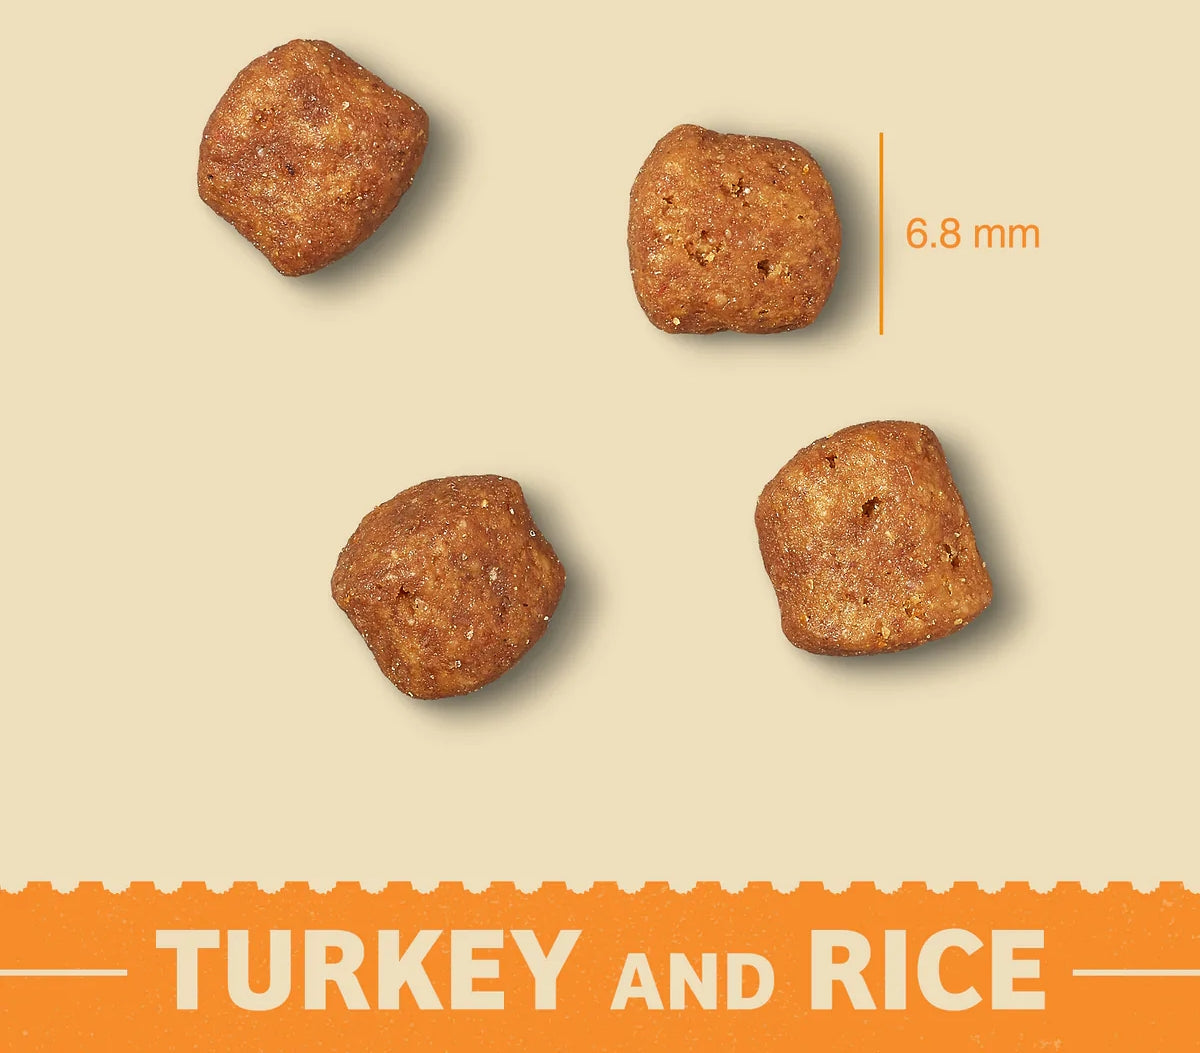 James Wellbeloved - Senior Turkey & Rice Dry Cat Food - 1.5kg